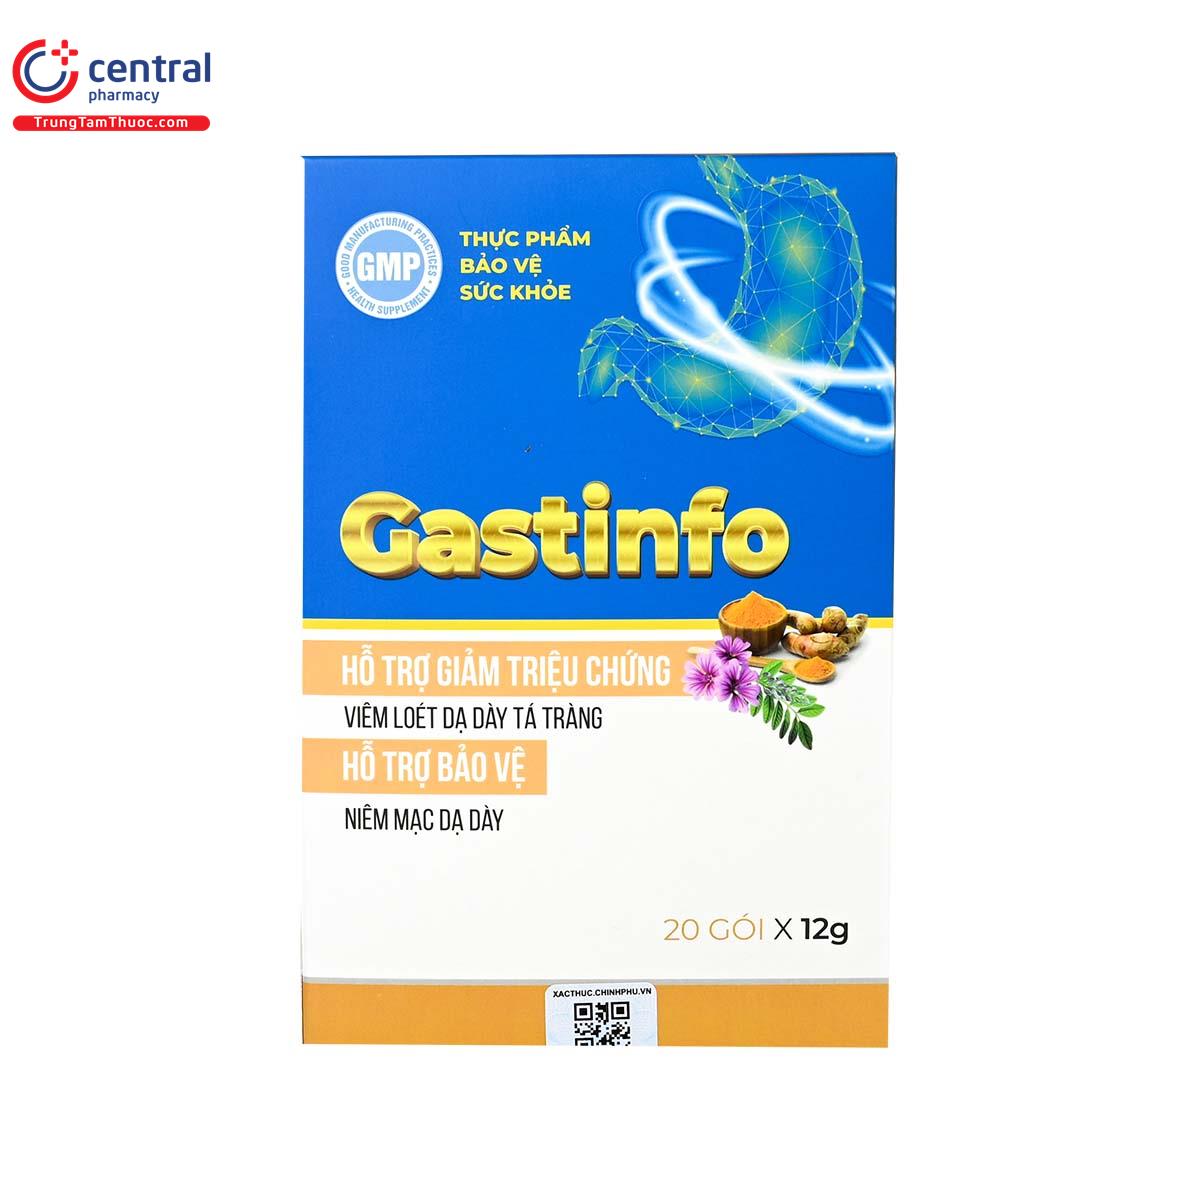 gastinfo 1 I3207